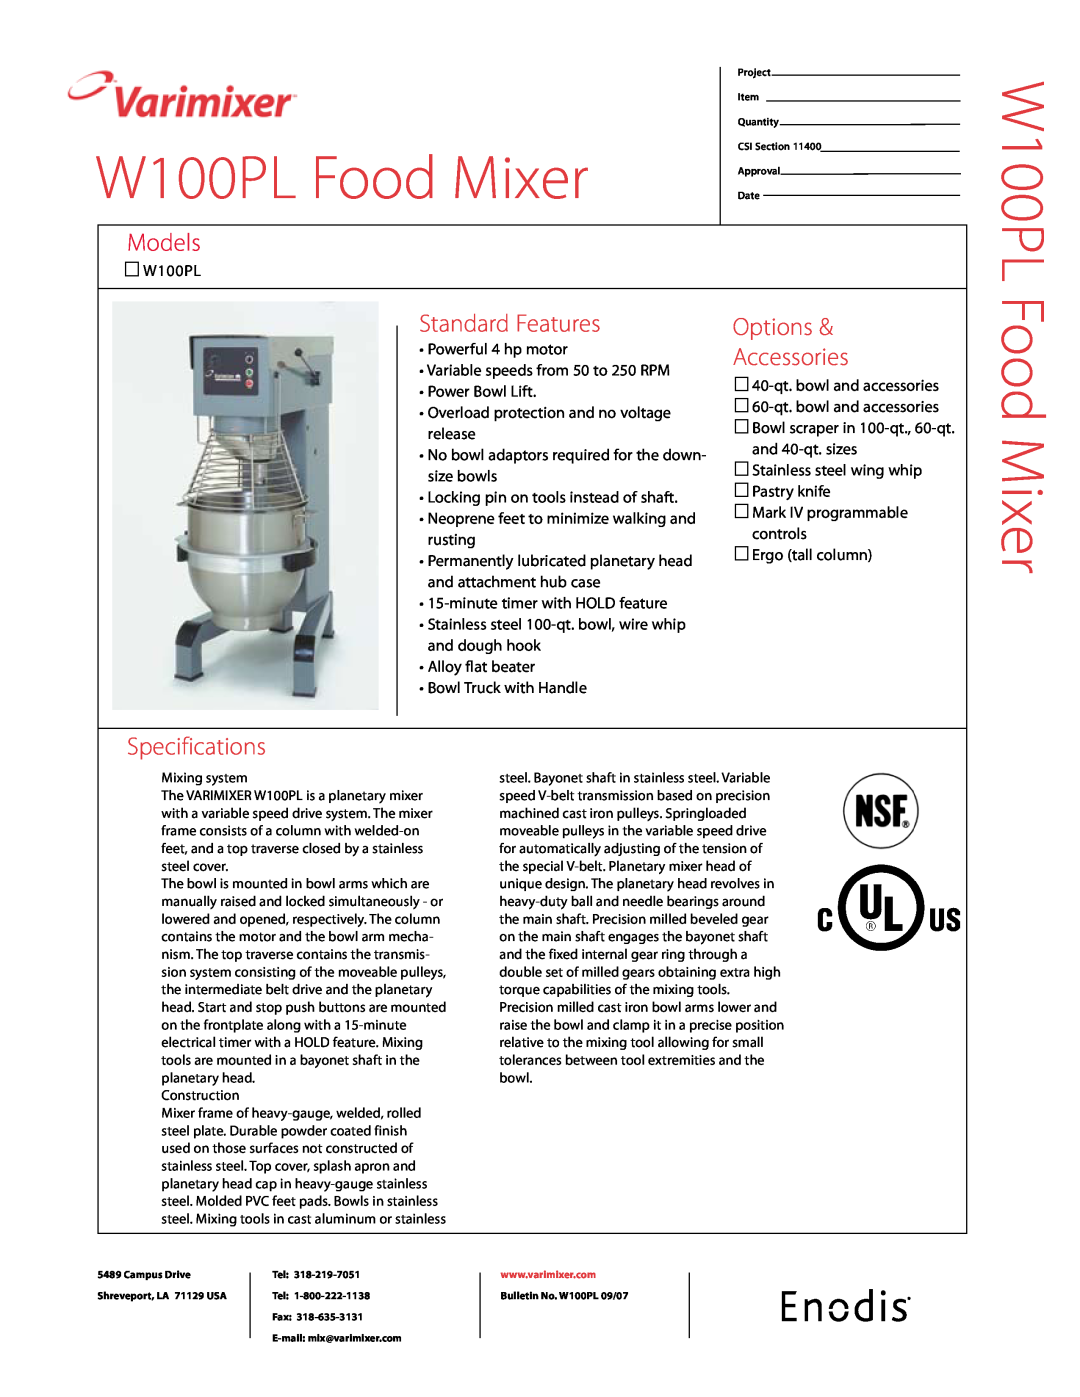 Varimixer specifications W100PL Food Mixer, Models, Standard Features, Options, Accessories, Specifications 